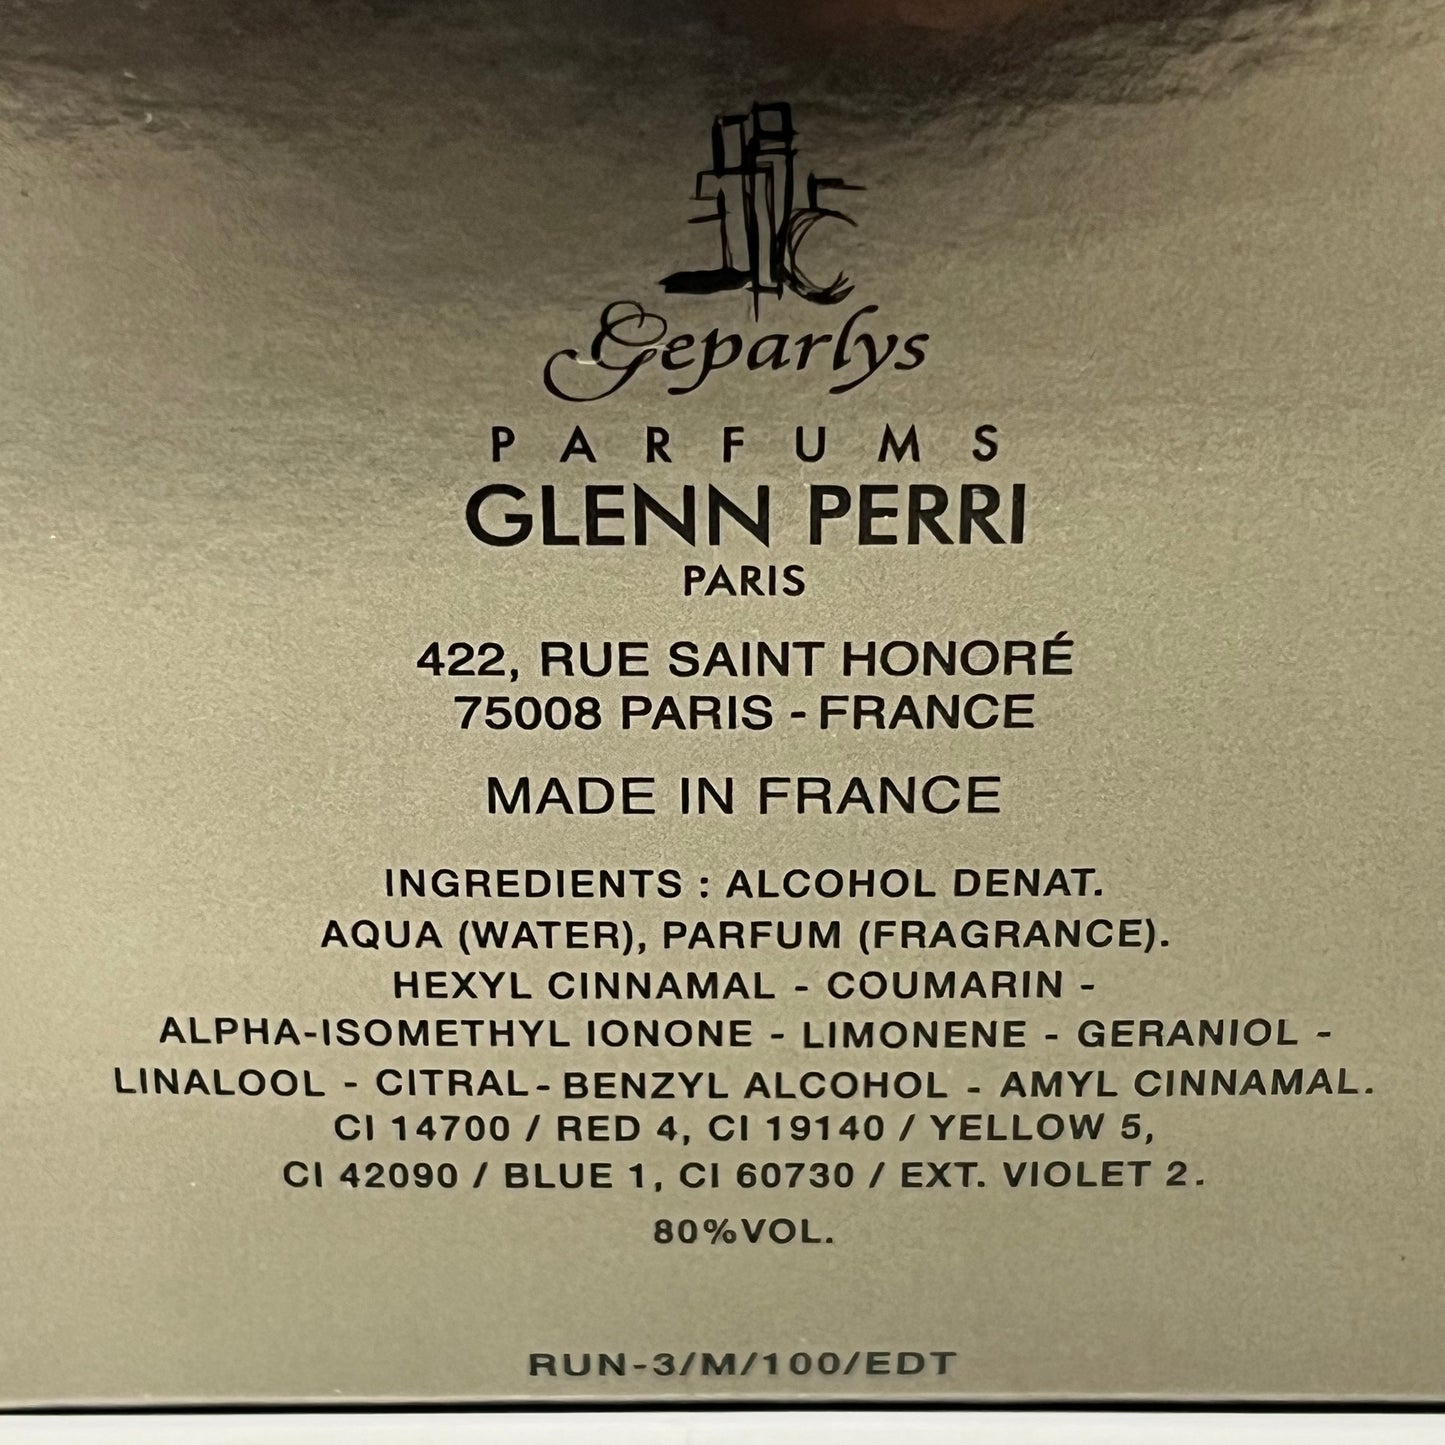 GLENN PERRI Unpredictable Pour Homme For Men 3.4 oz / 100ml (New)